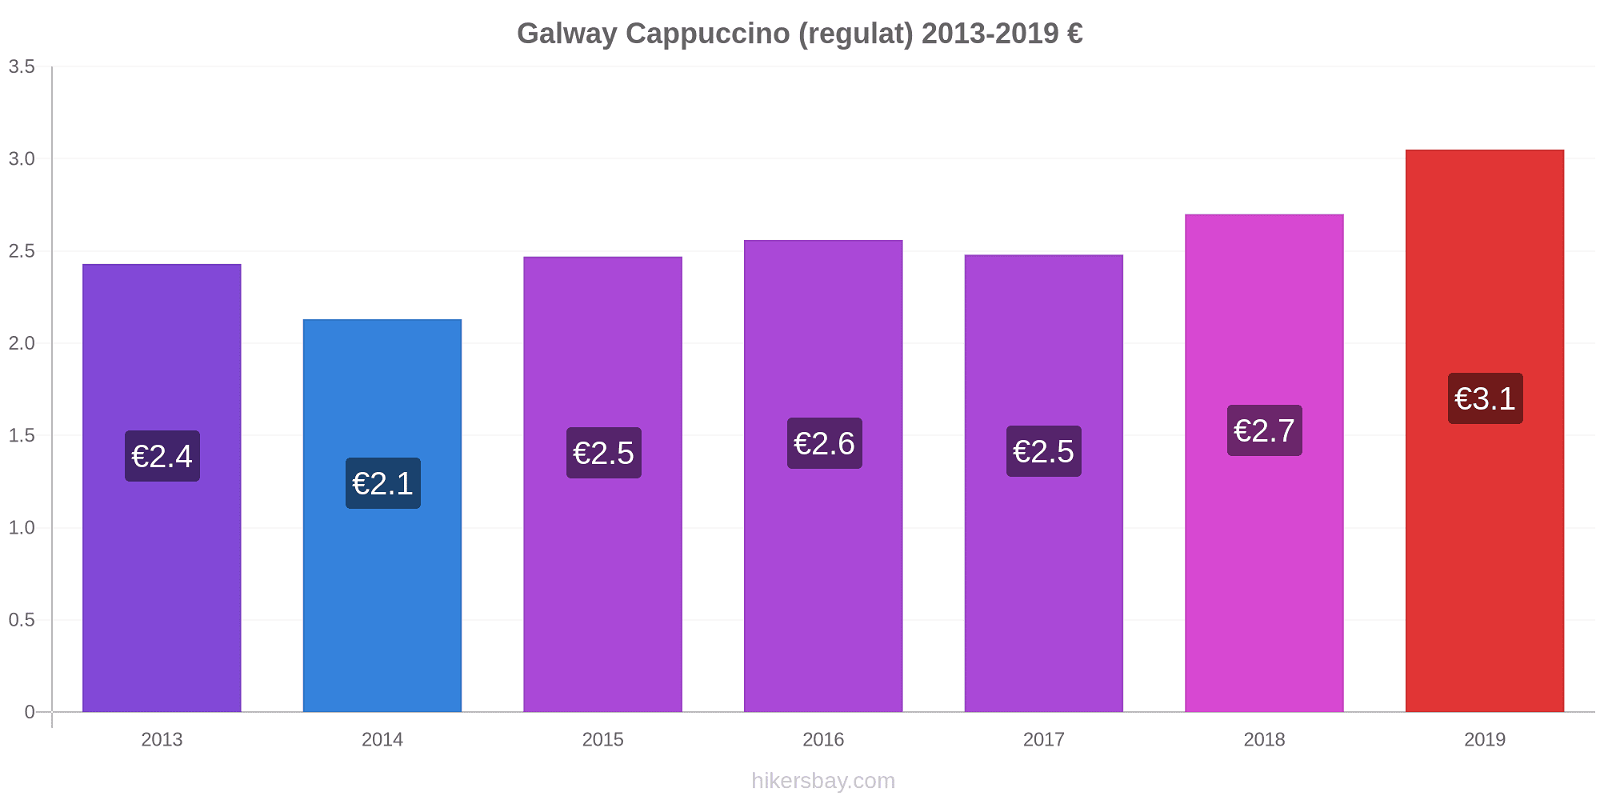 Galway modificări de preț Cappuccino (regulat) hikersbay.com